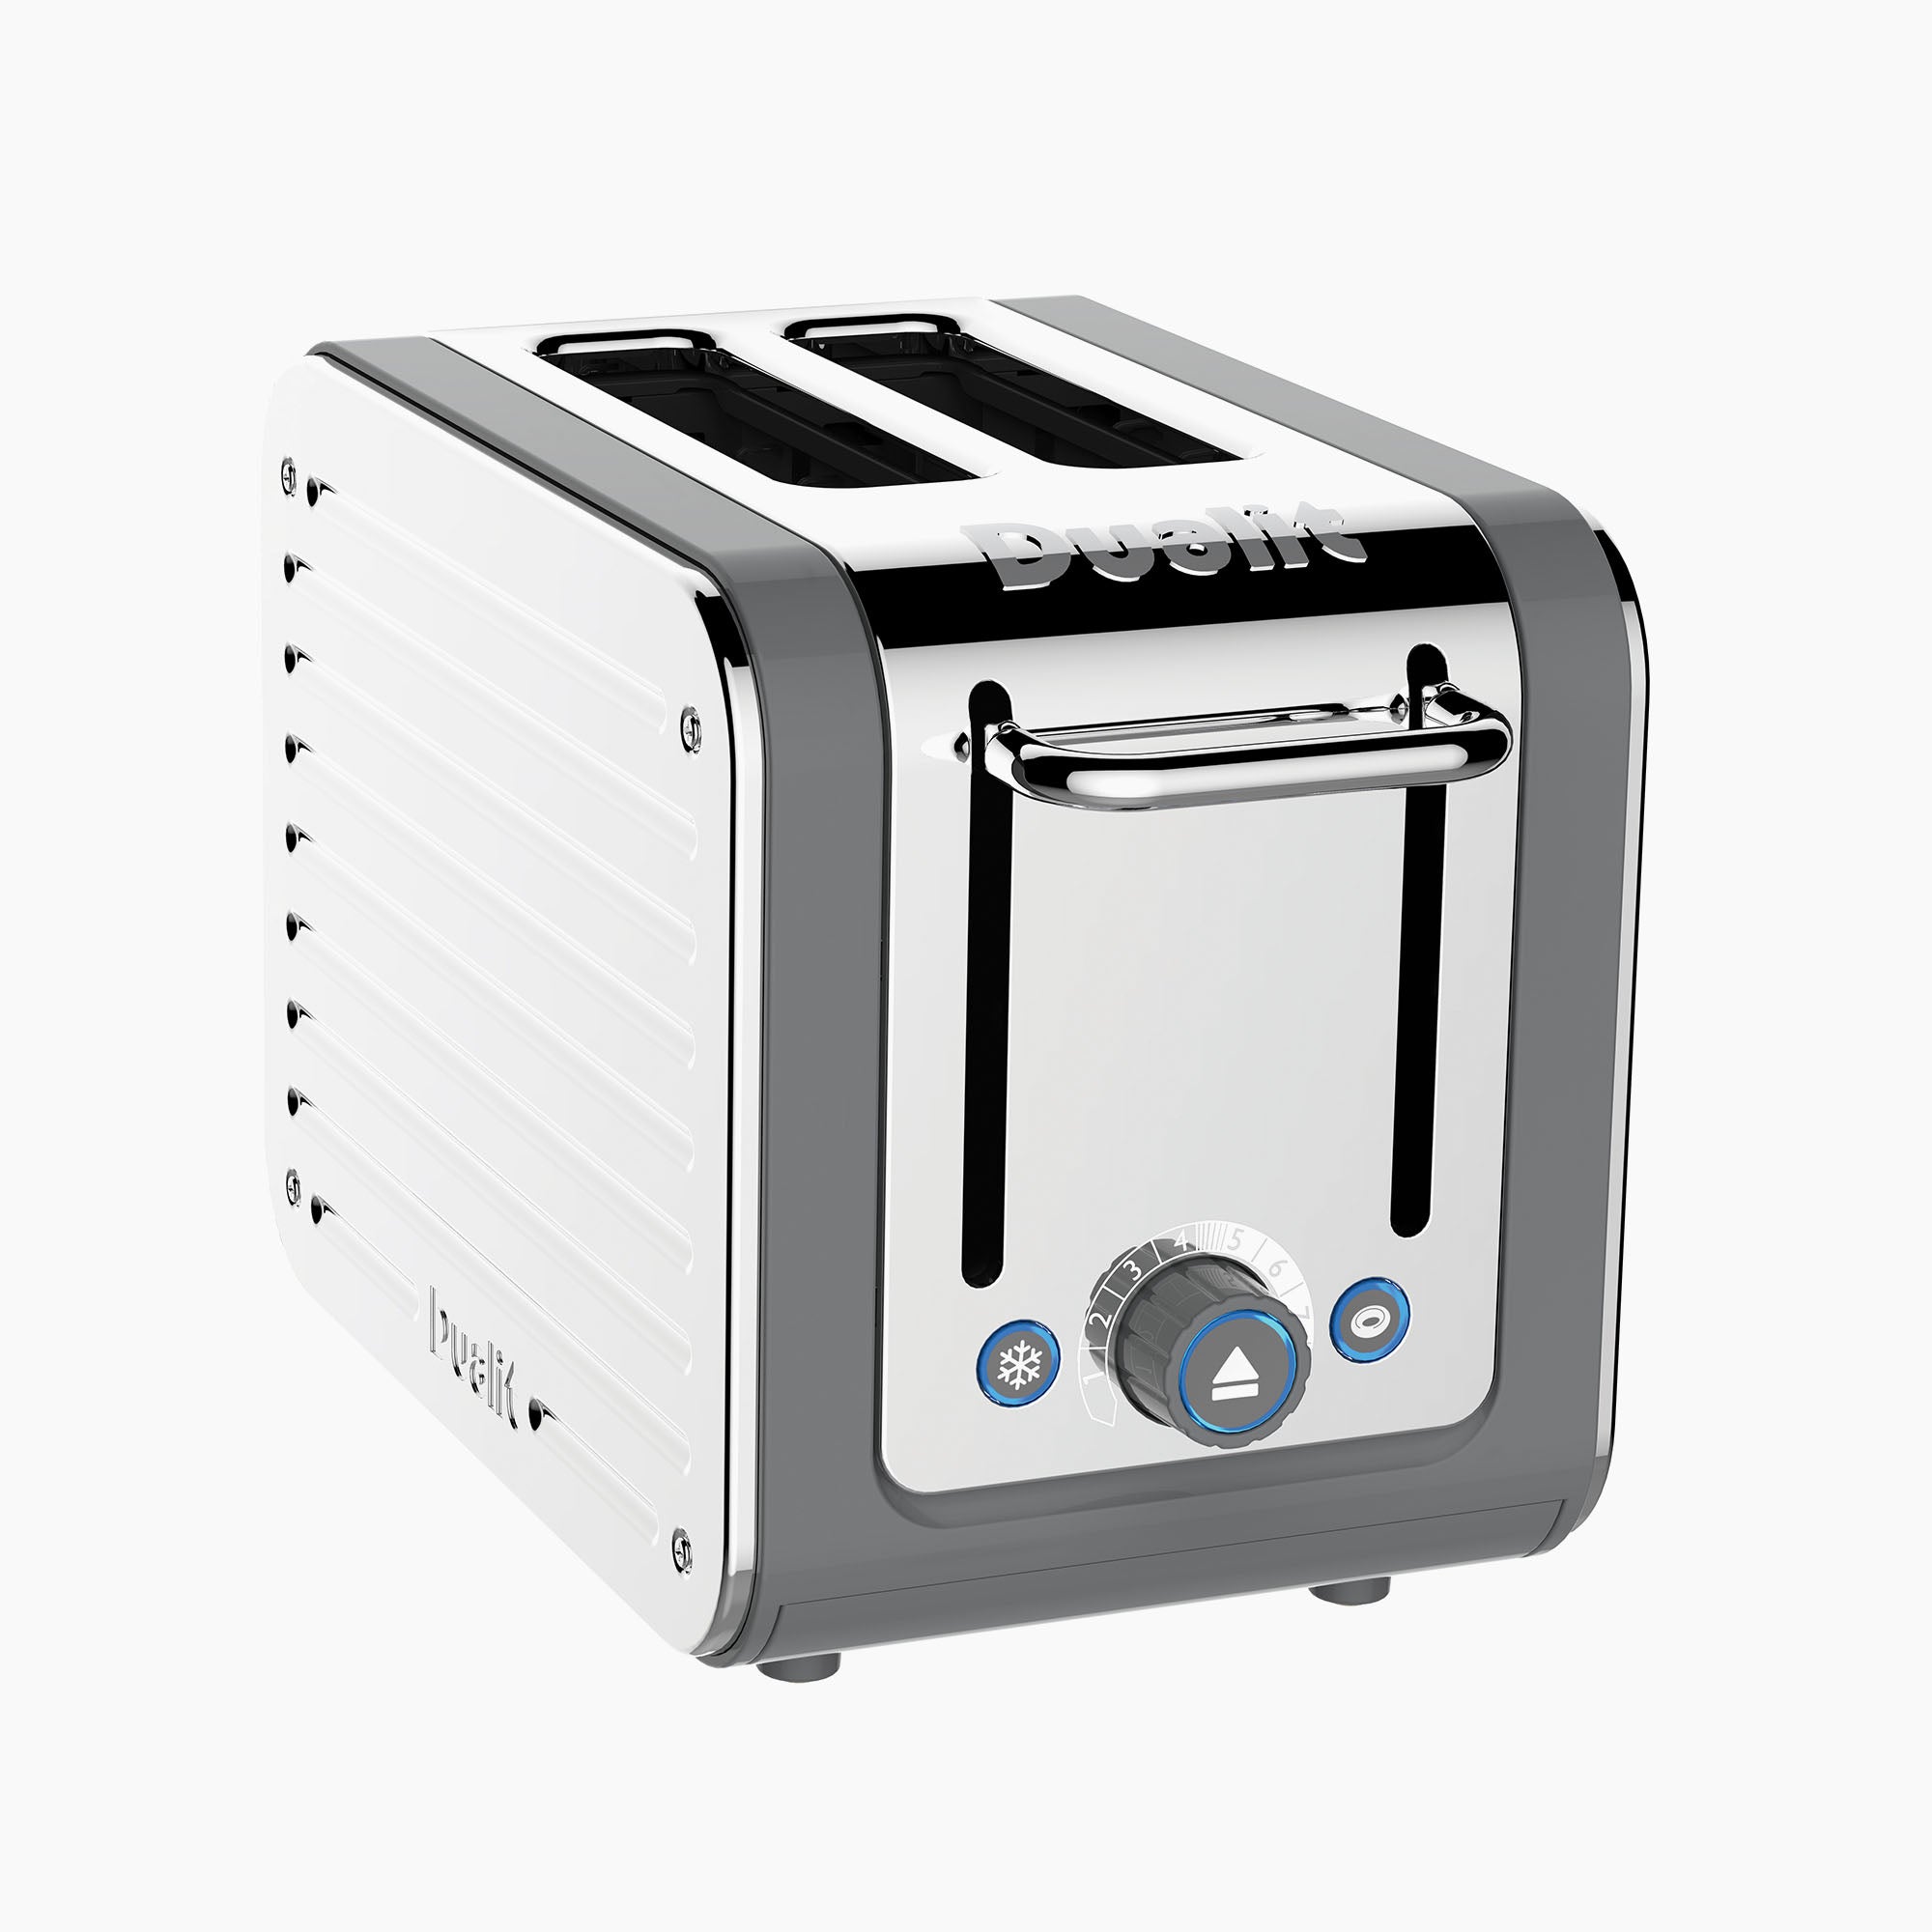 Dualit 2-Slot Classic Toaster